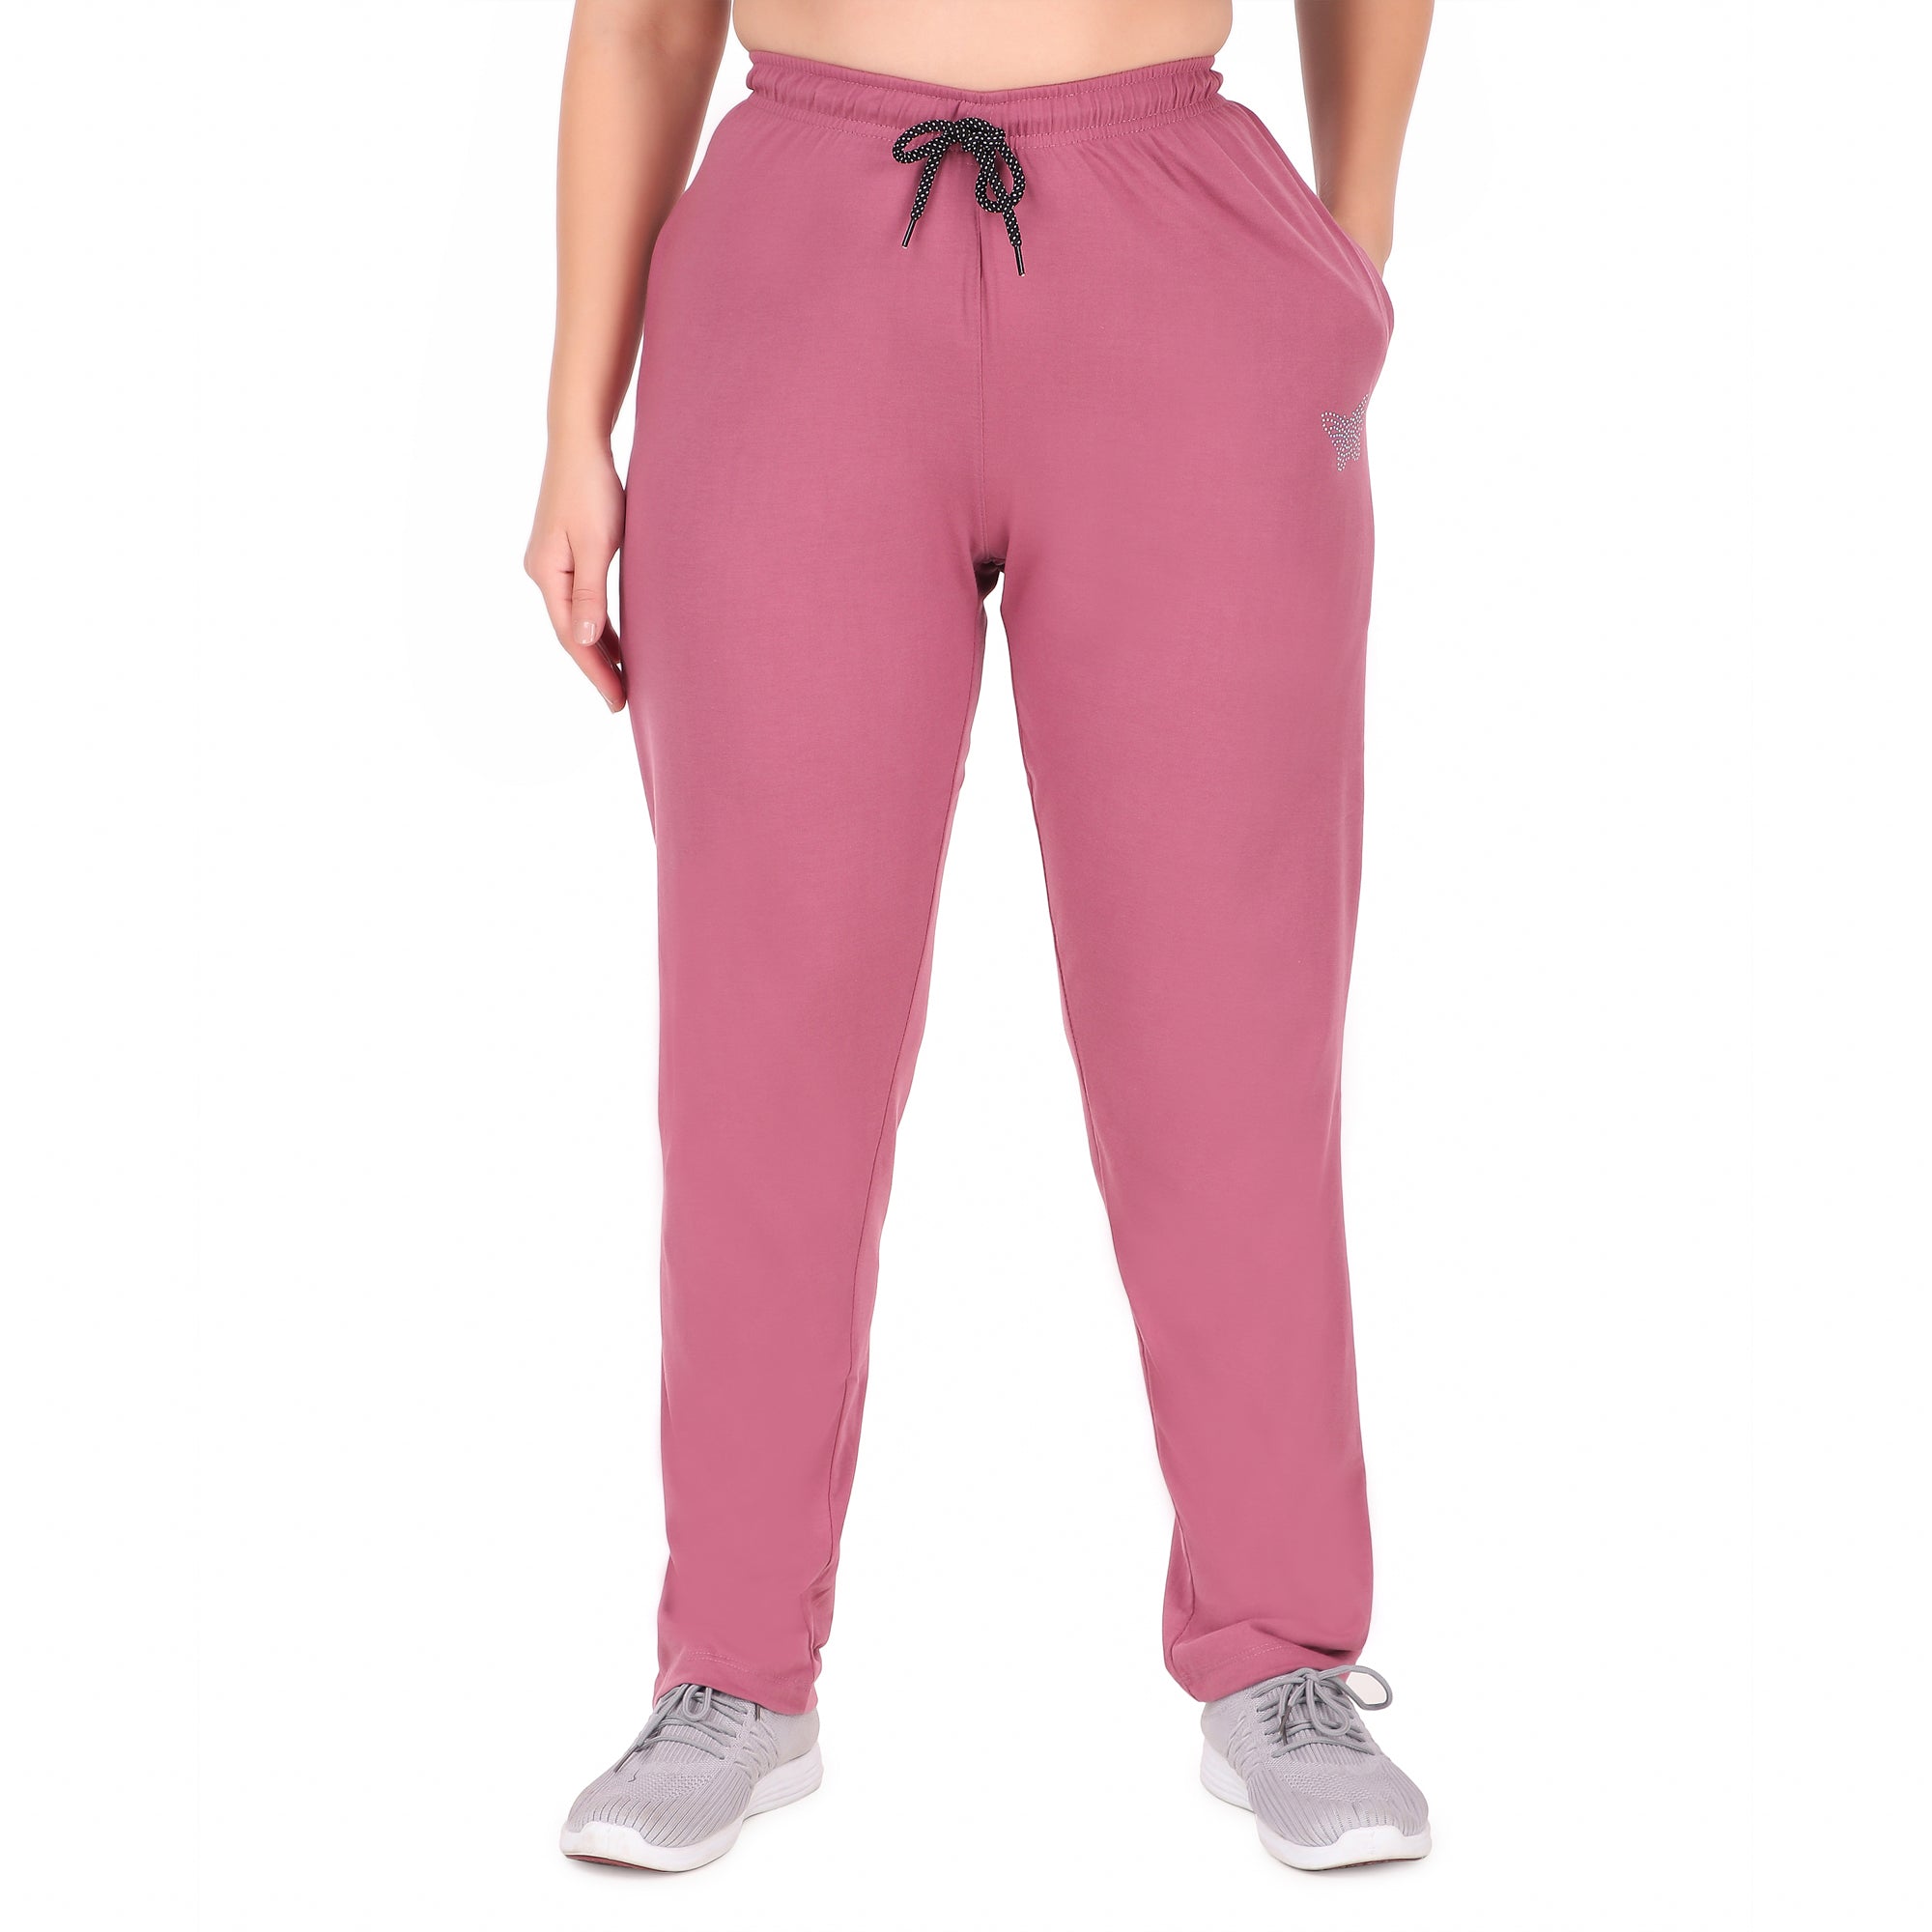 Puma Printed Side Panel Sweatpants - Grey - Womens - Shoplifestyle